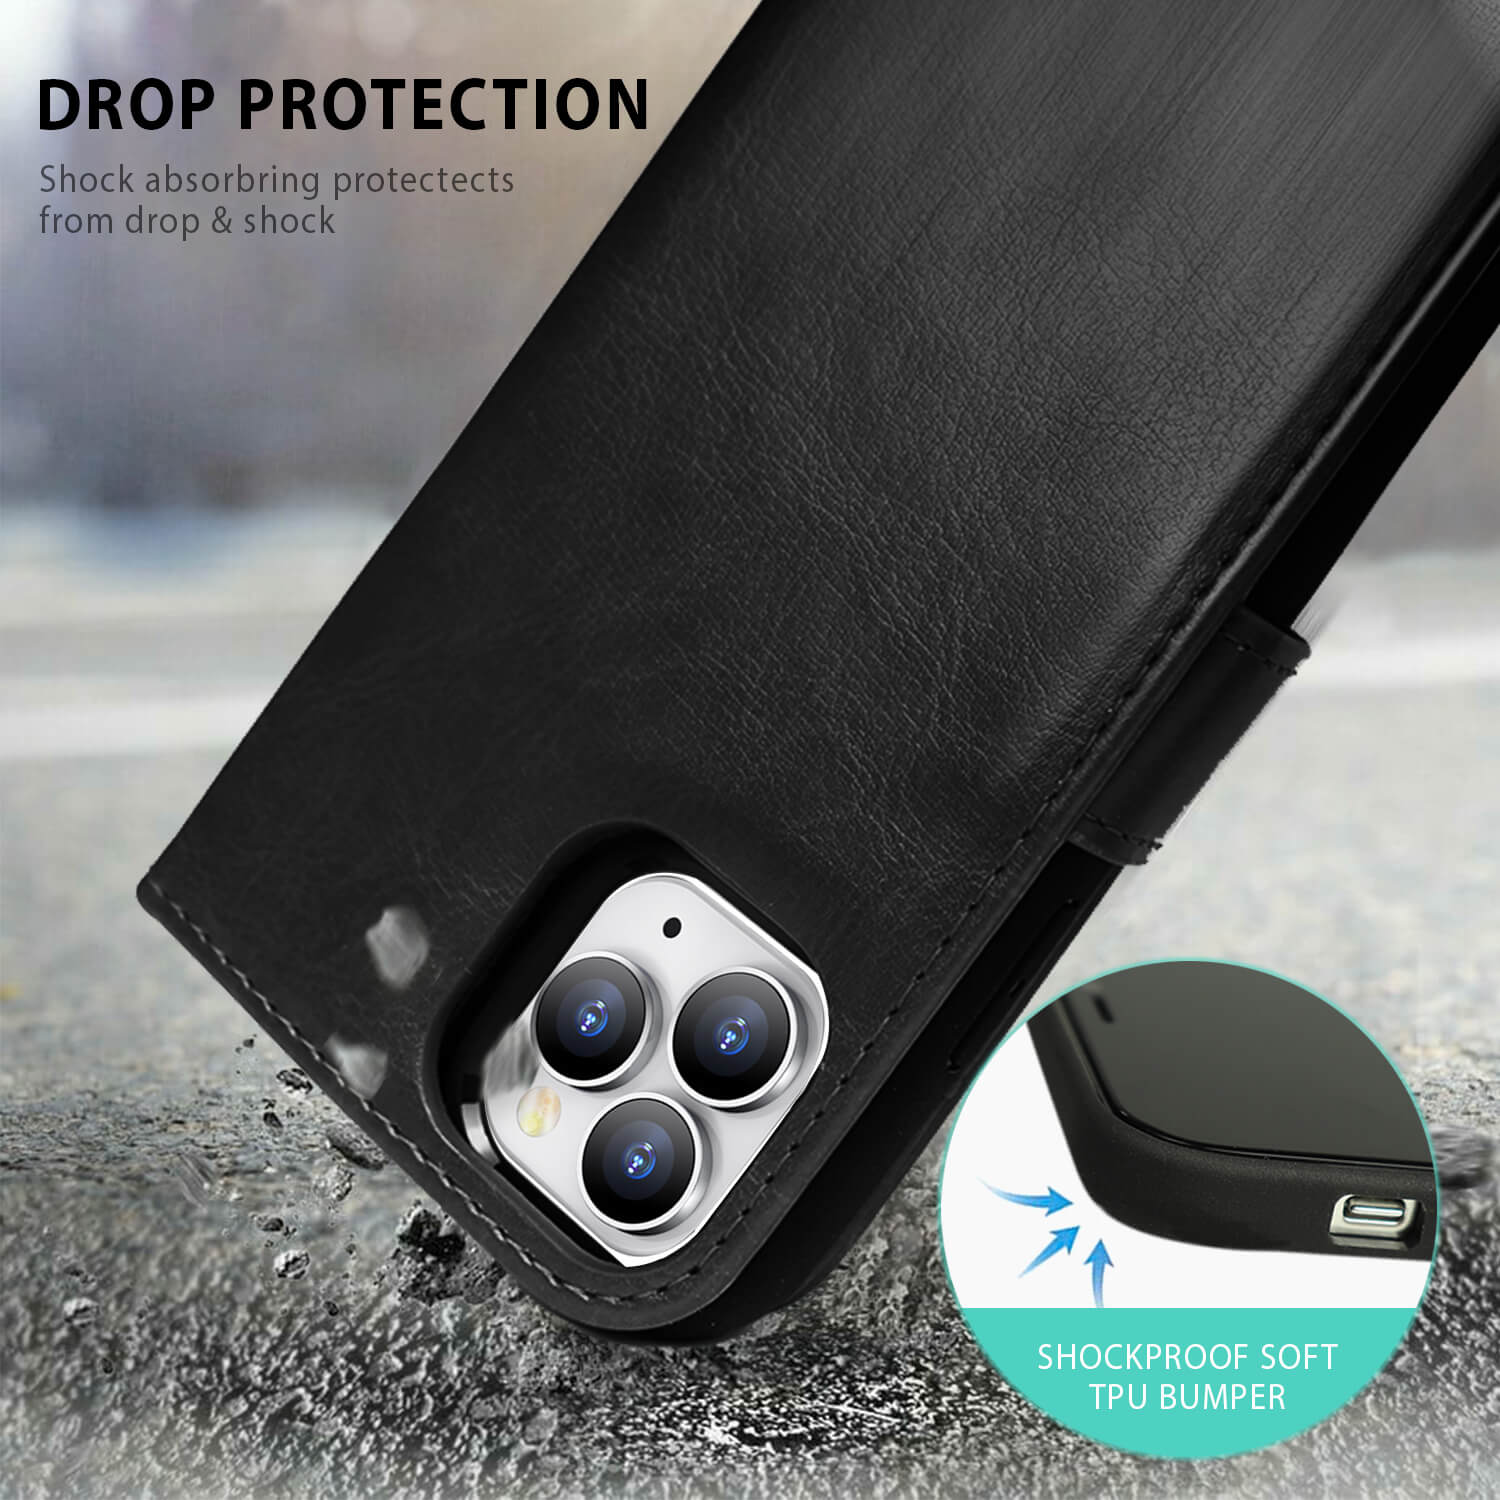 Tough On iPhone 13 Pro Case Magnetic Detachable Leather Black